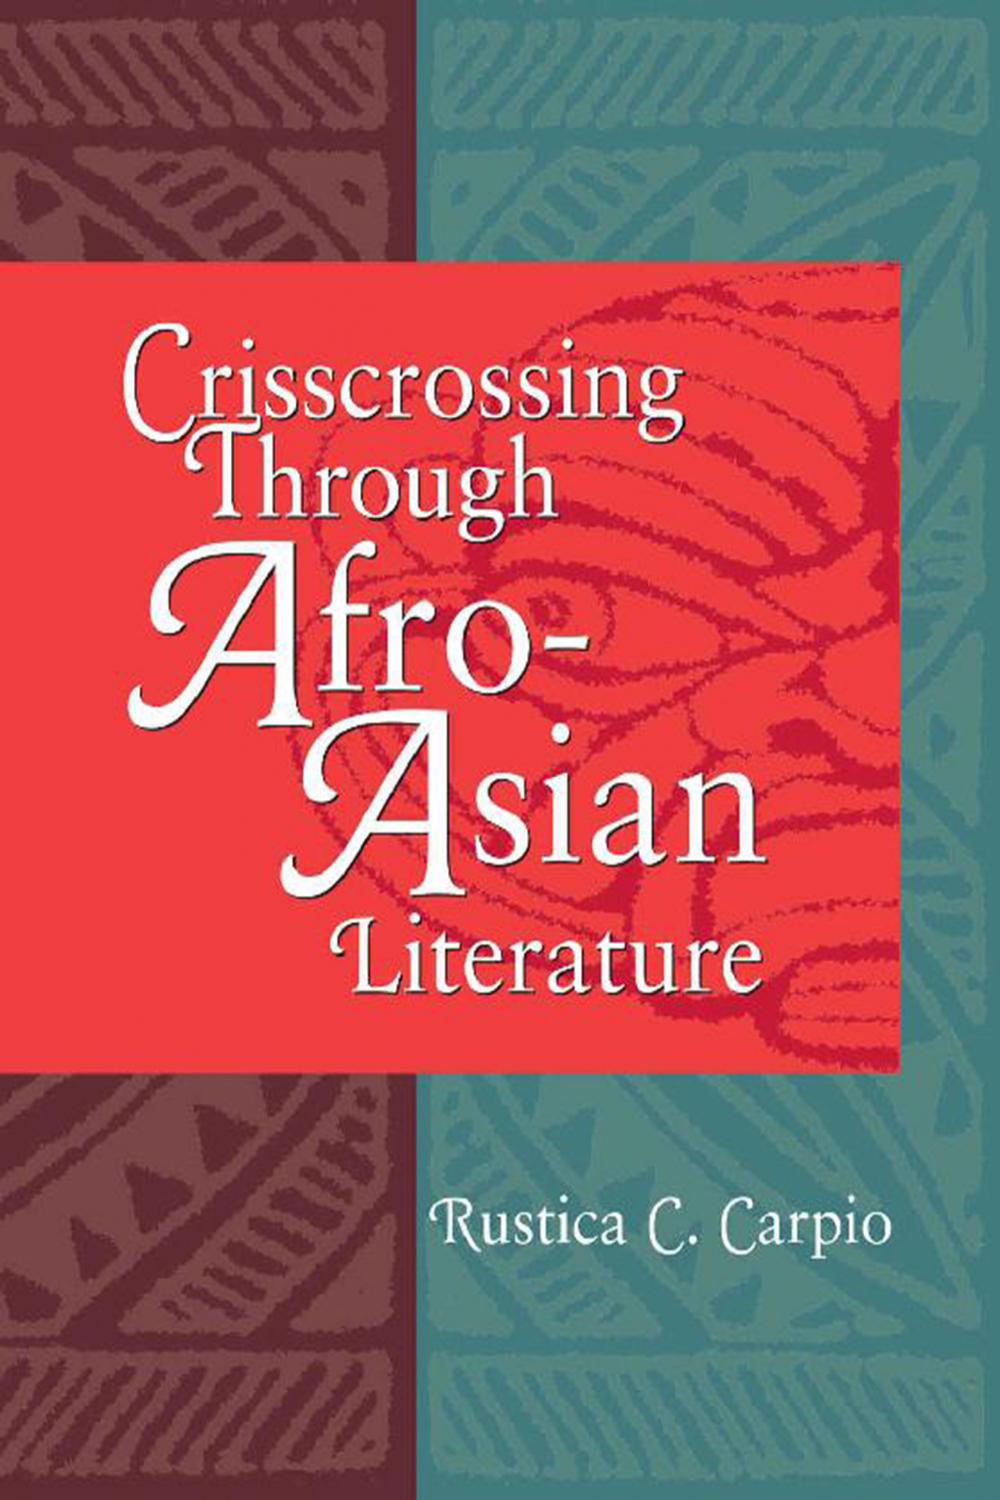 afro asian literature short stories